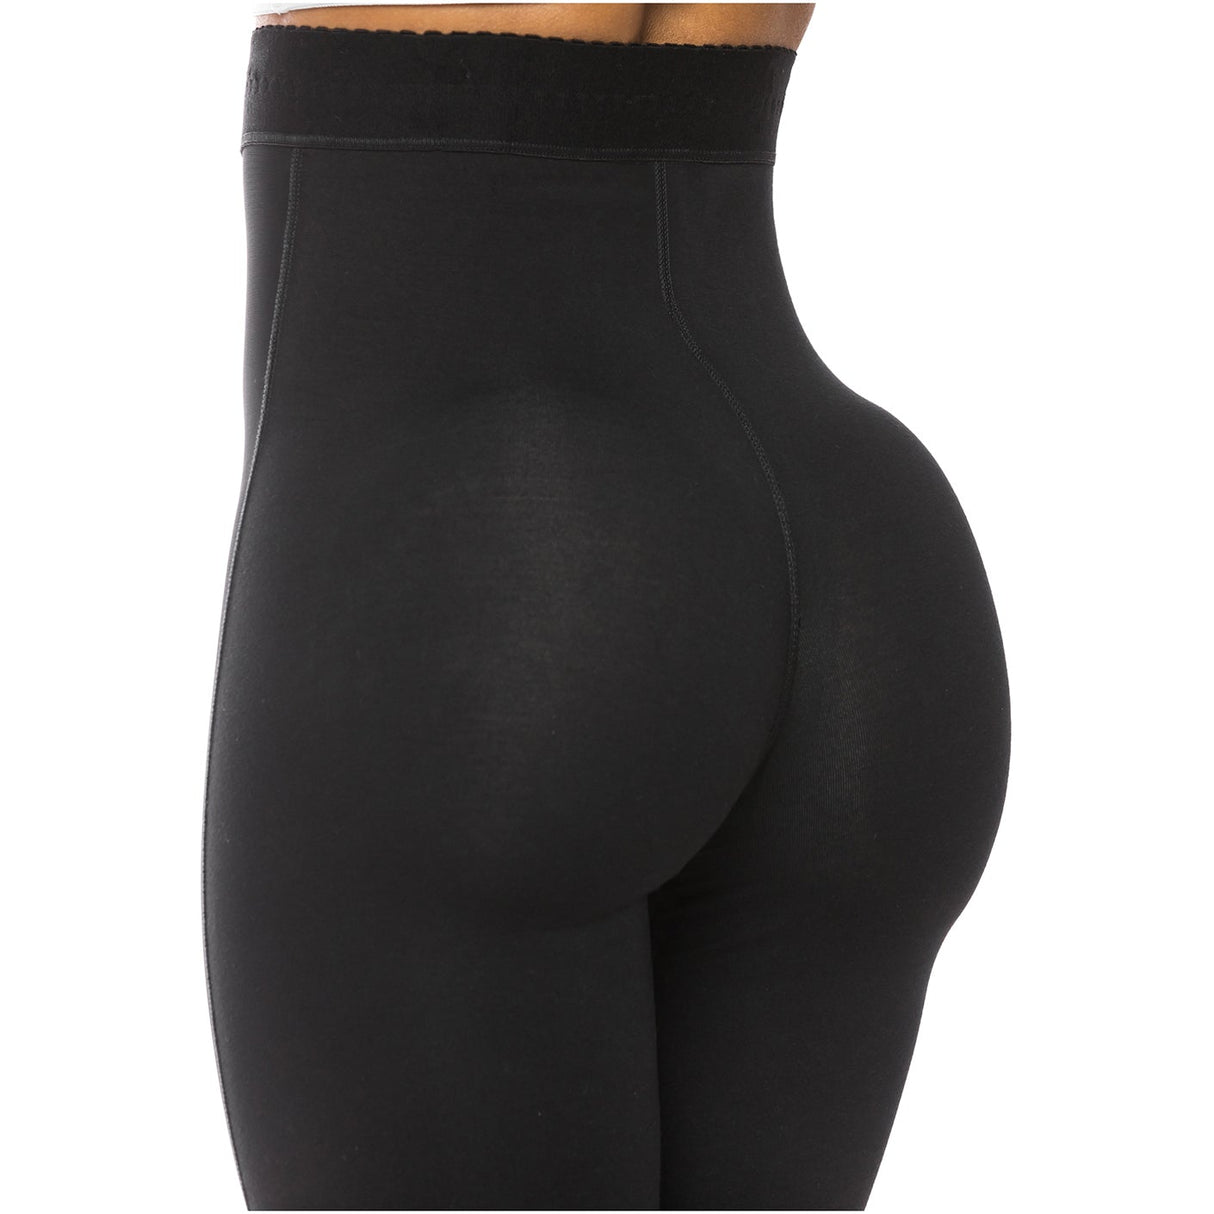 Women's Seamless Shaper Butt-Lift High Panty Capri Faja Colombiana Black